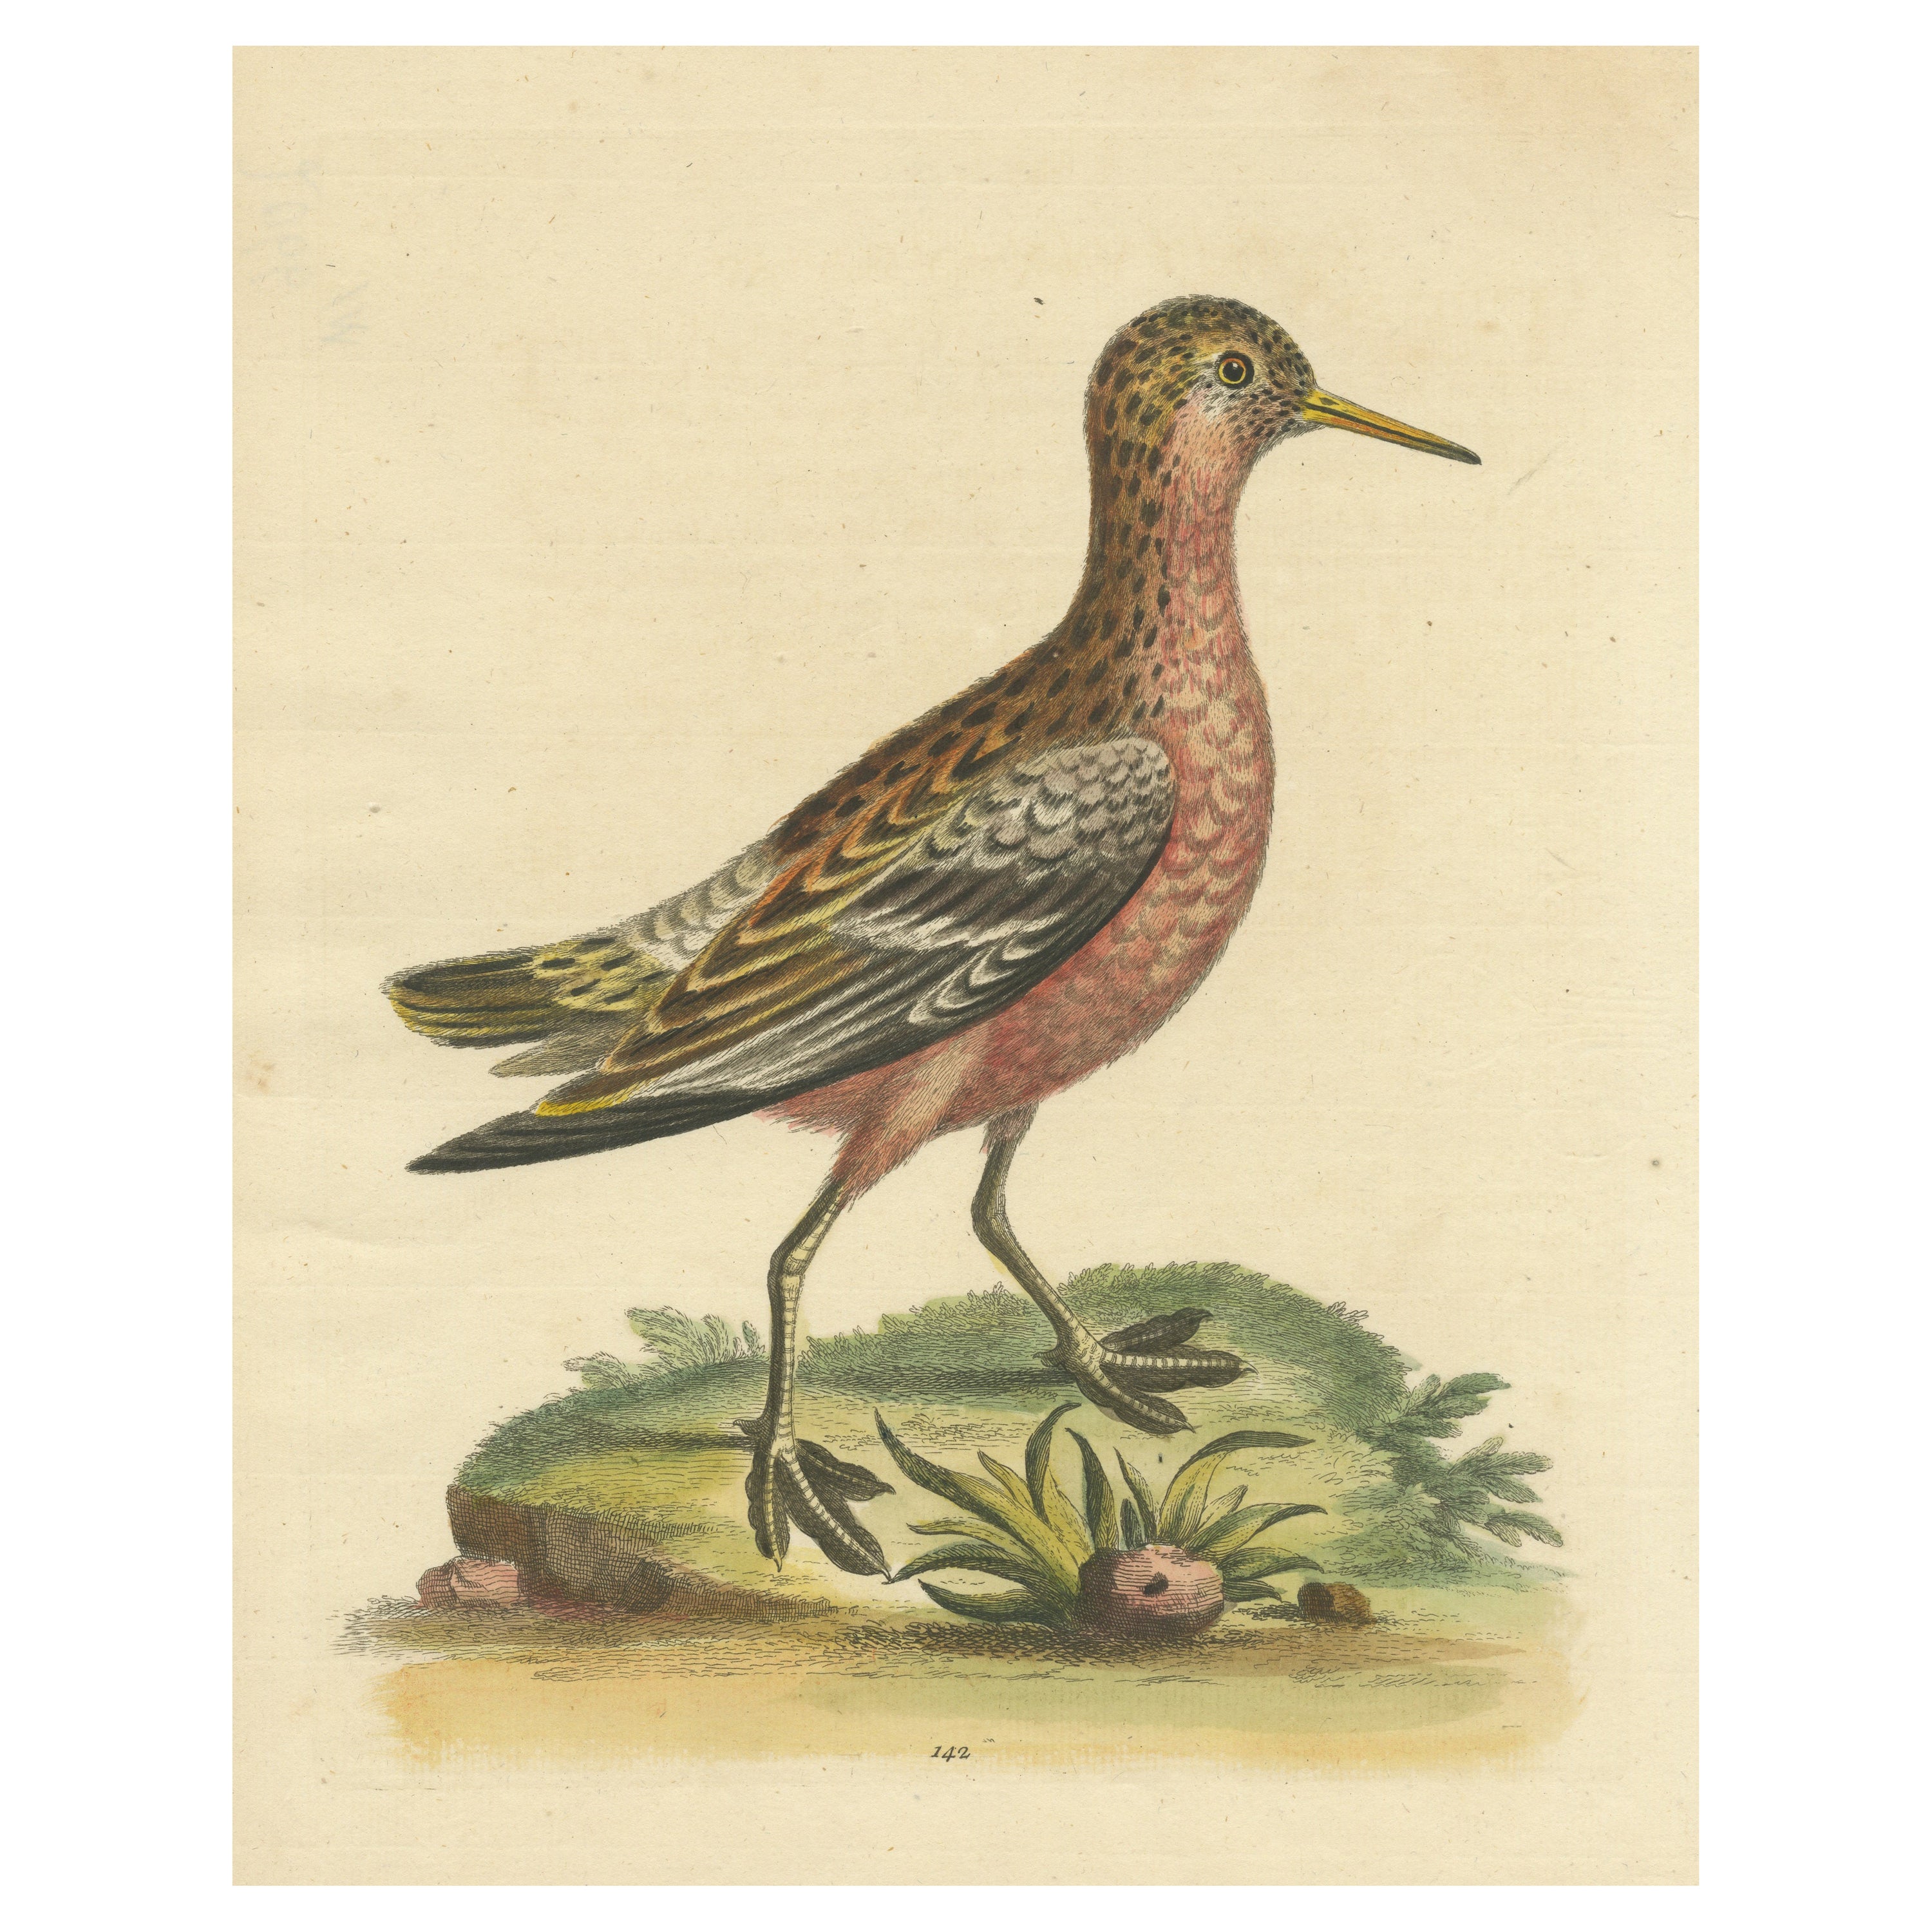 Antique Bird Print of a Sandpiper